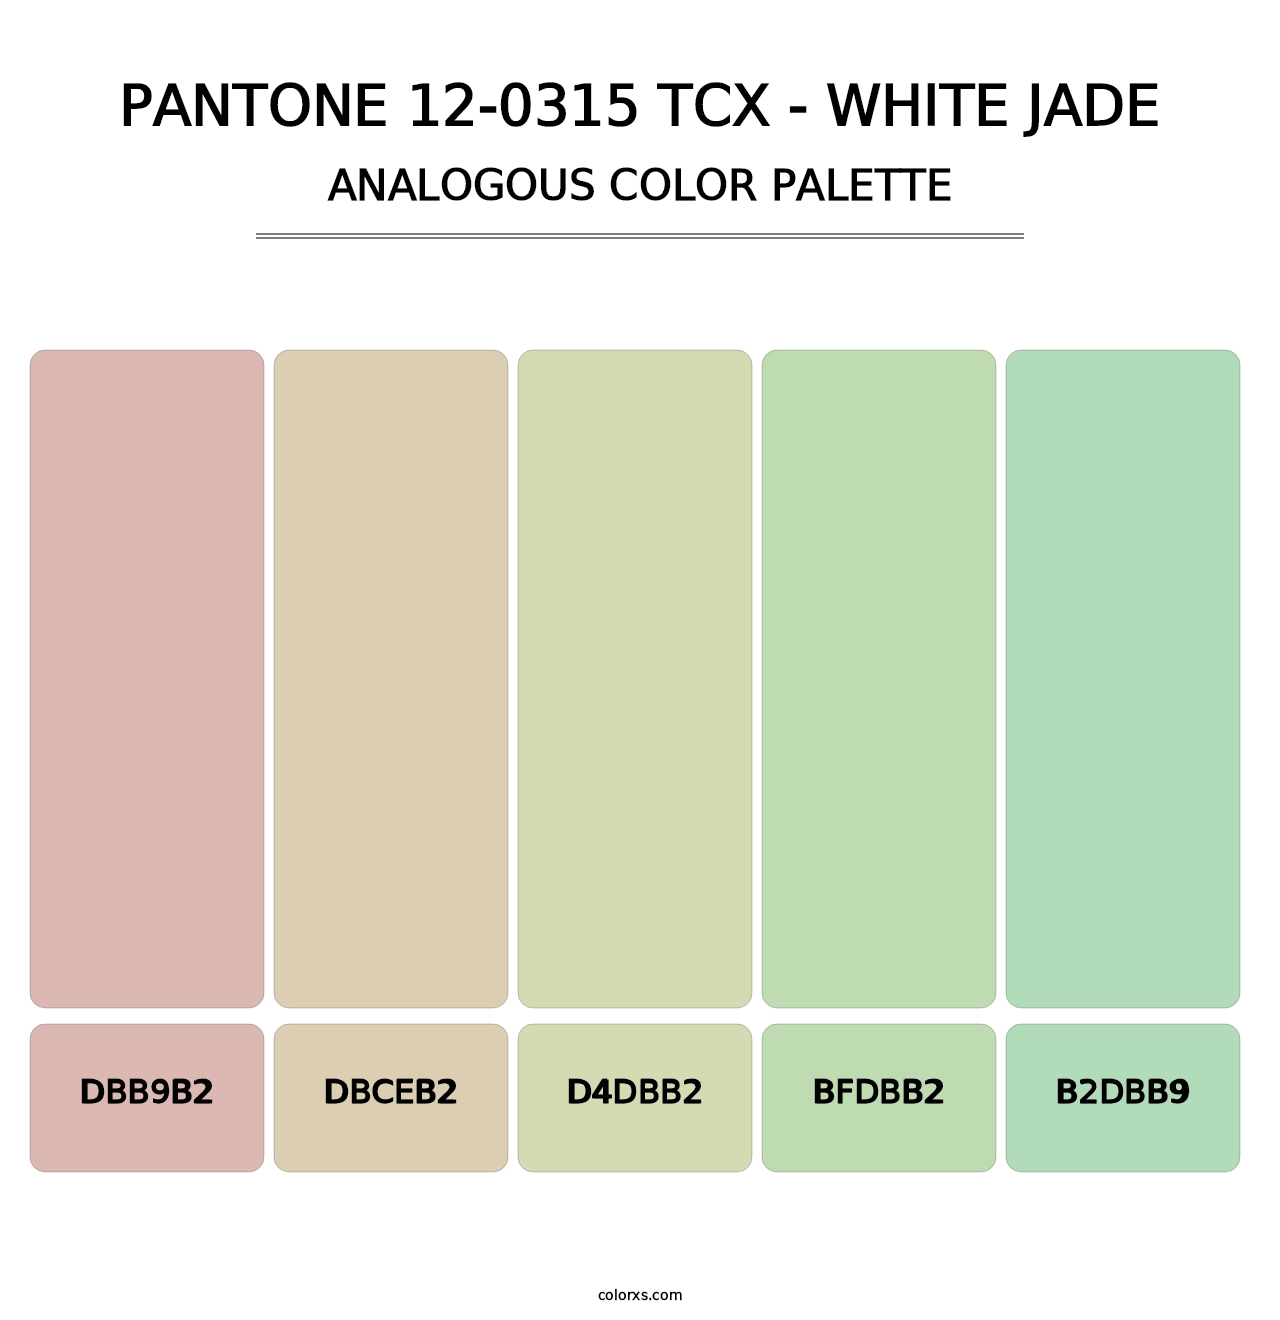 PANTONE 12-0315 TCX - White Jade - Analogous Color Palette